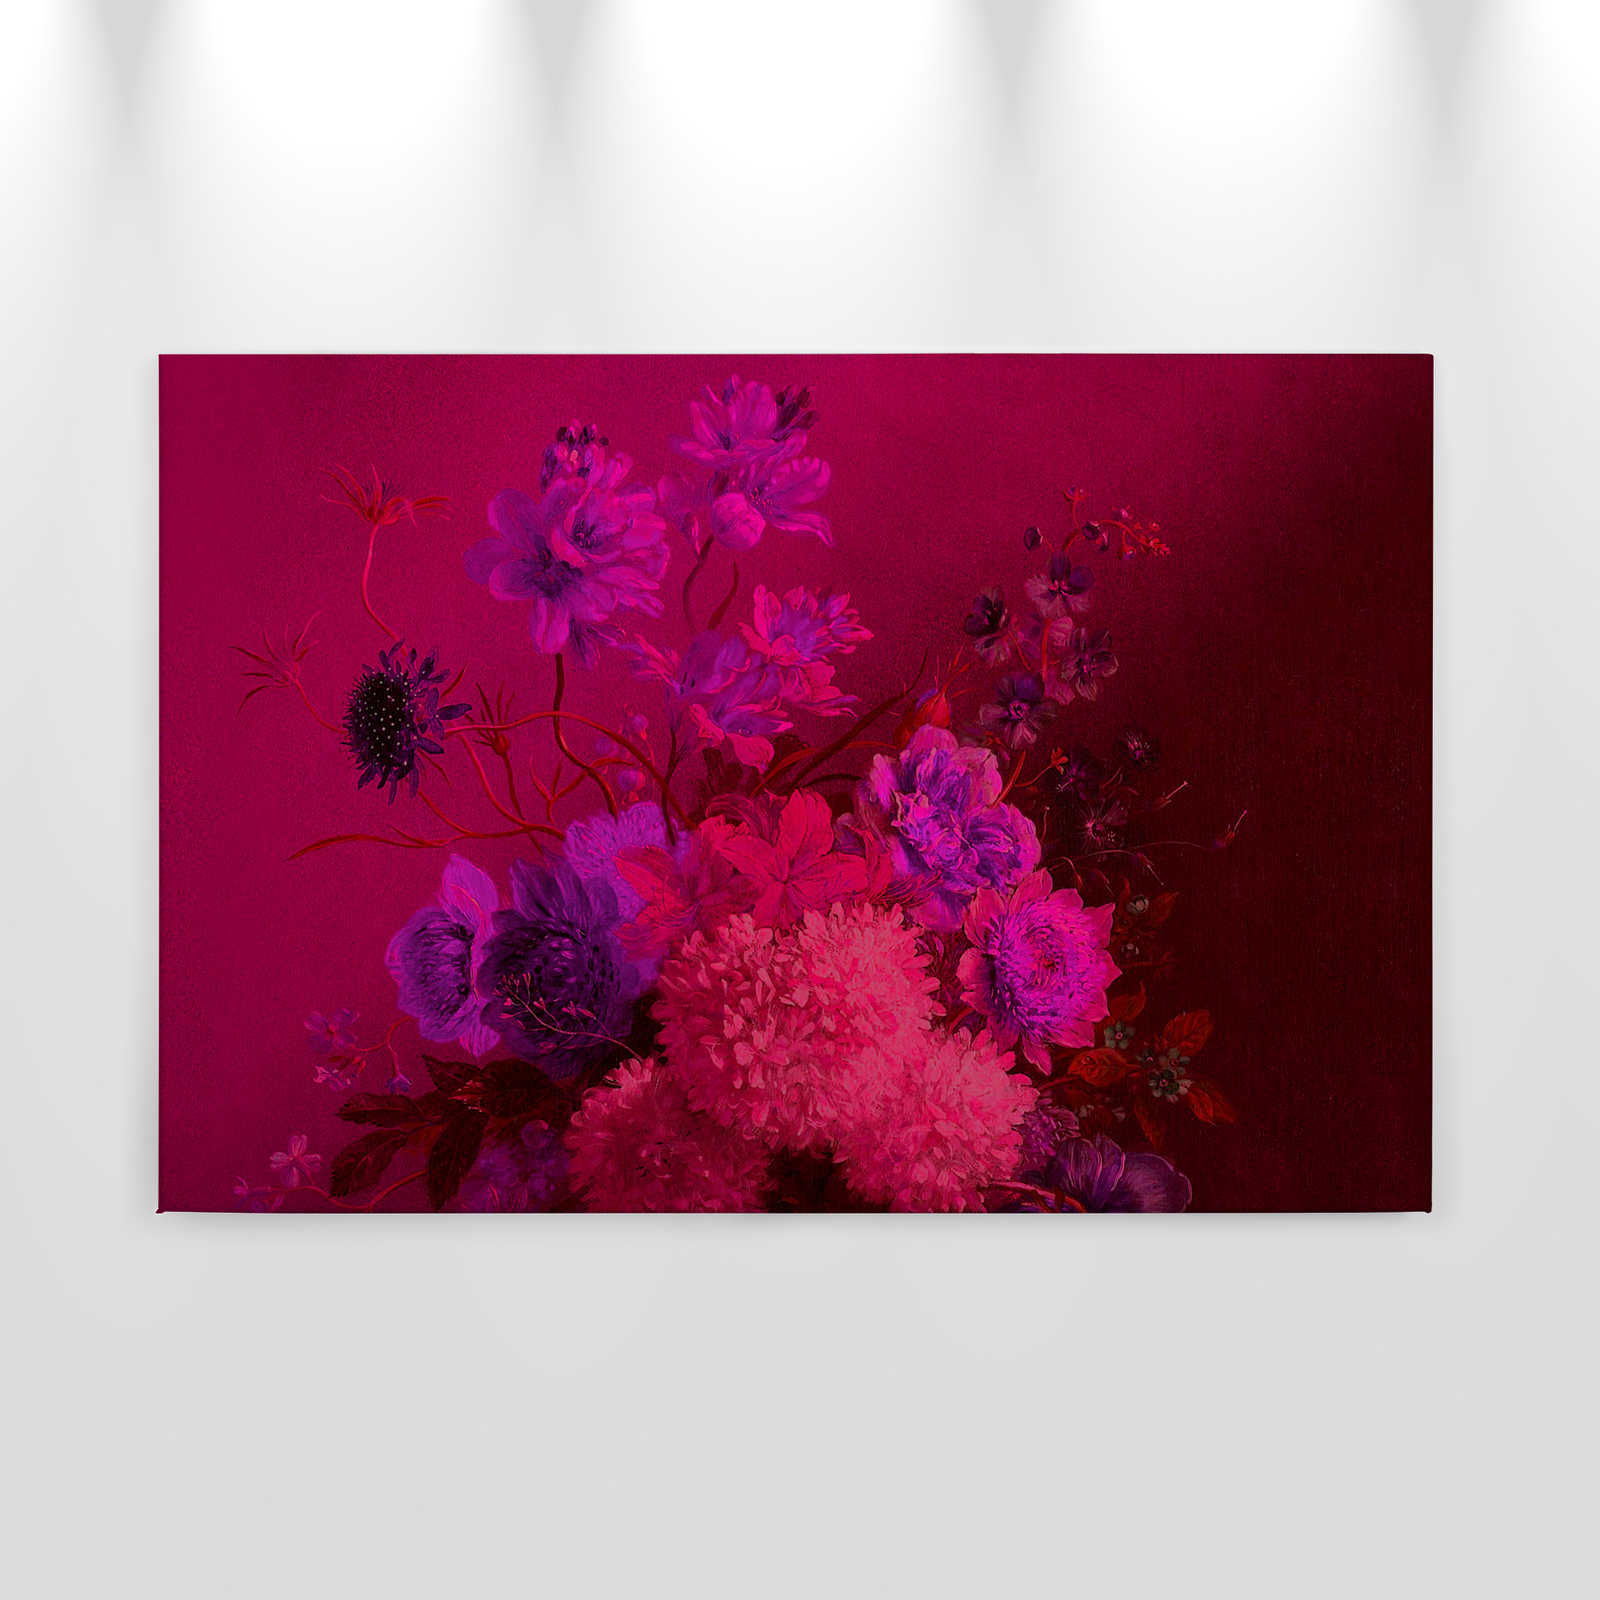             Lienzo neón Pintura con flores Naturaleza muerta | bouquet Vibran 2 - 0,90 m x 0,60 m
        